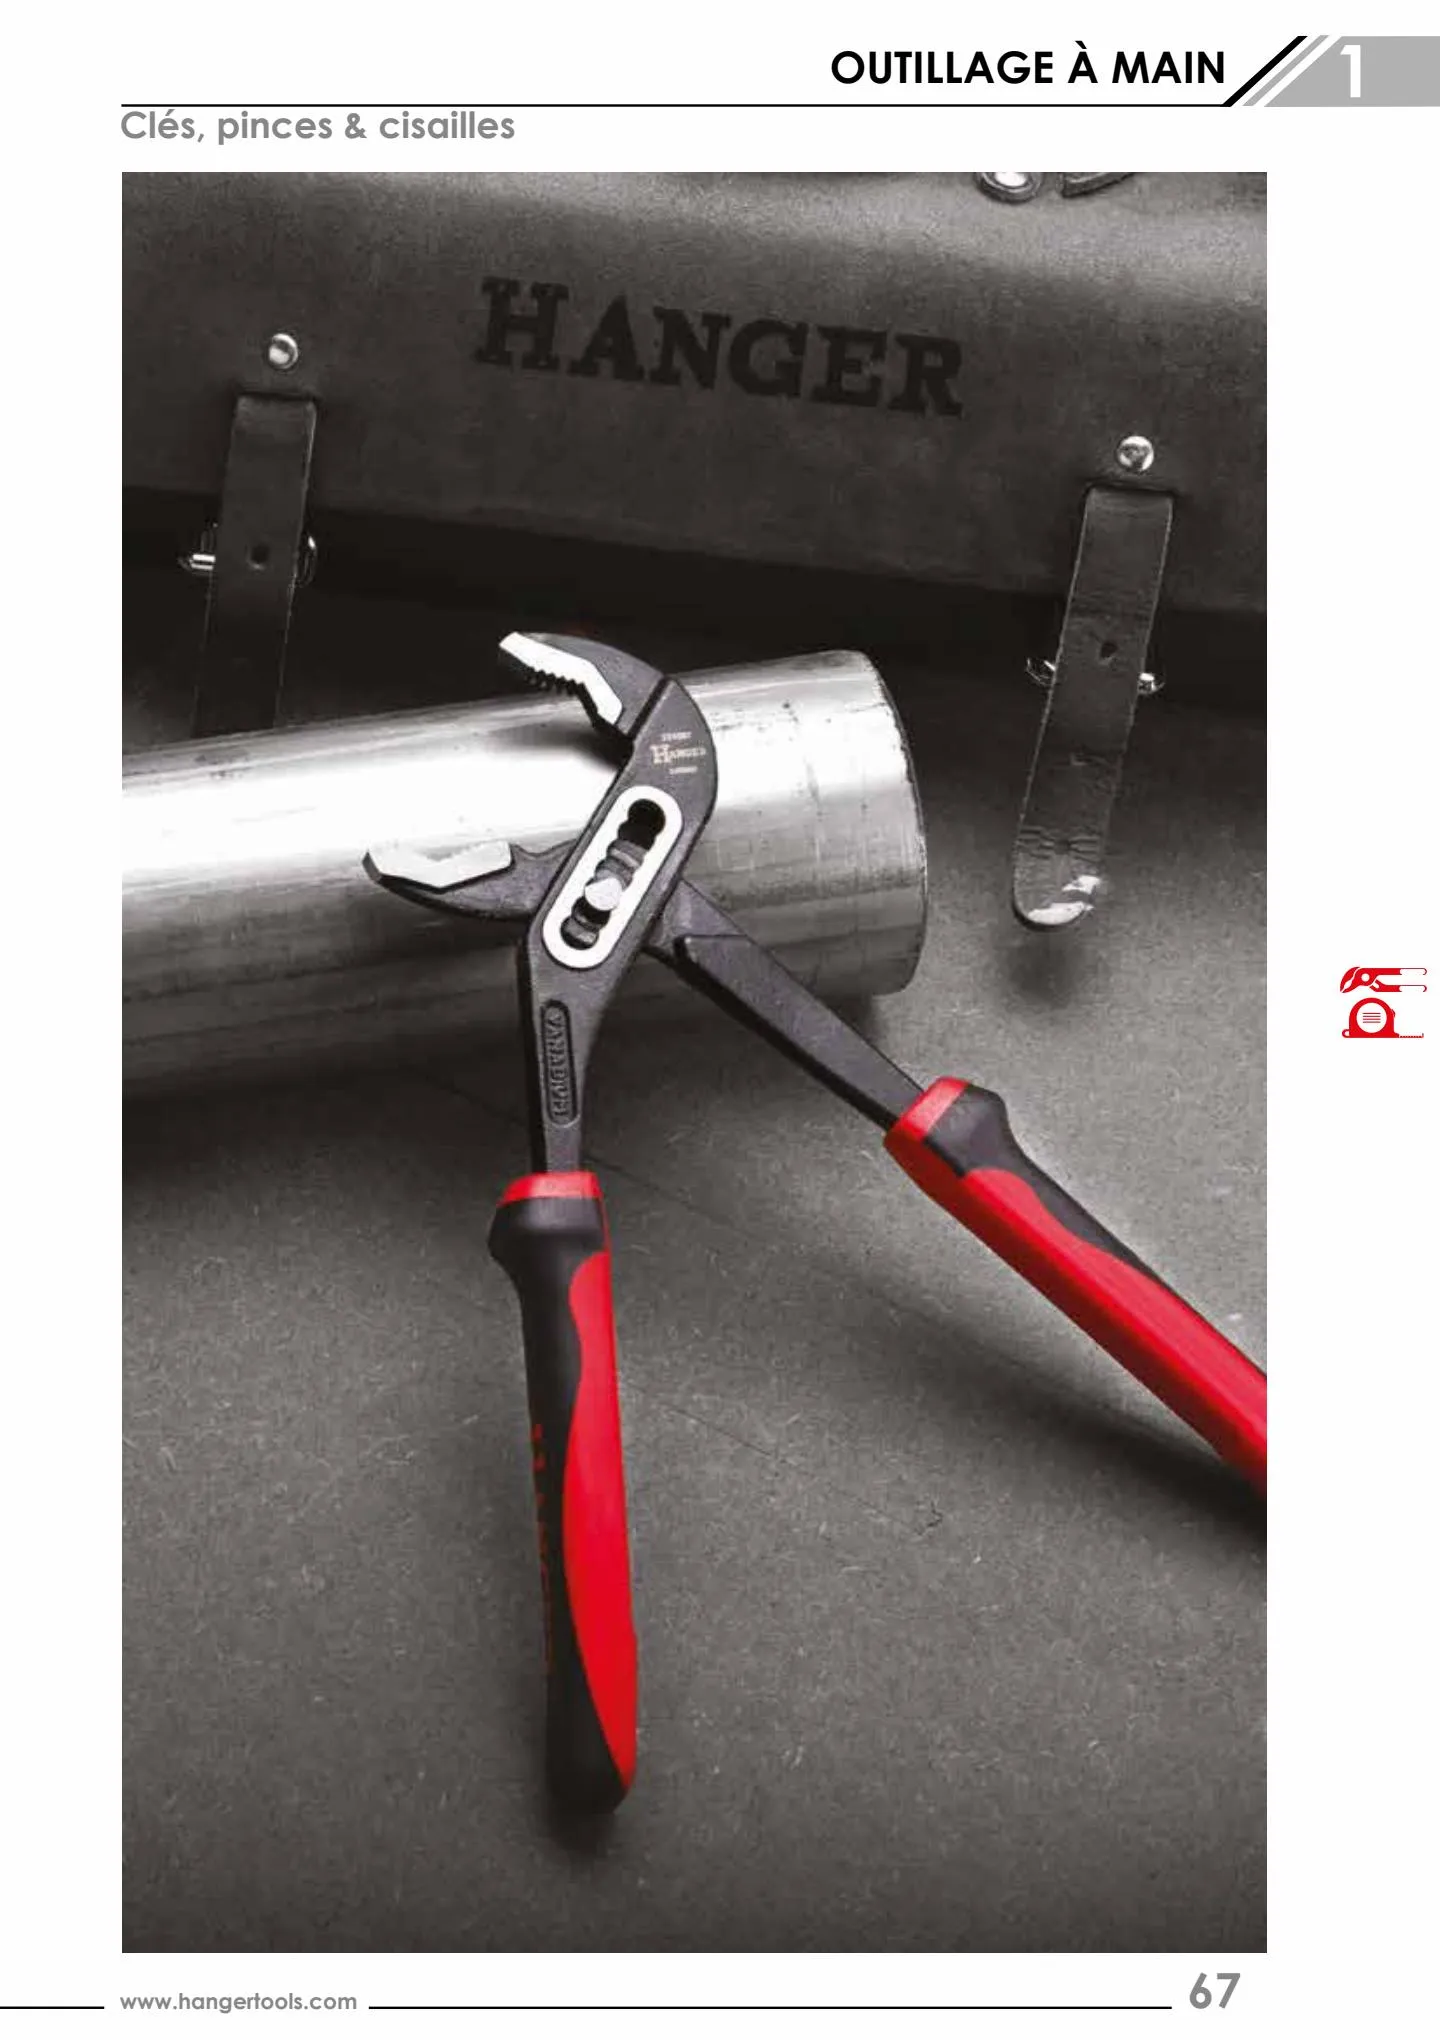 Catalogue Hanger Outillage professionnel, page 00077